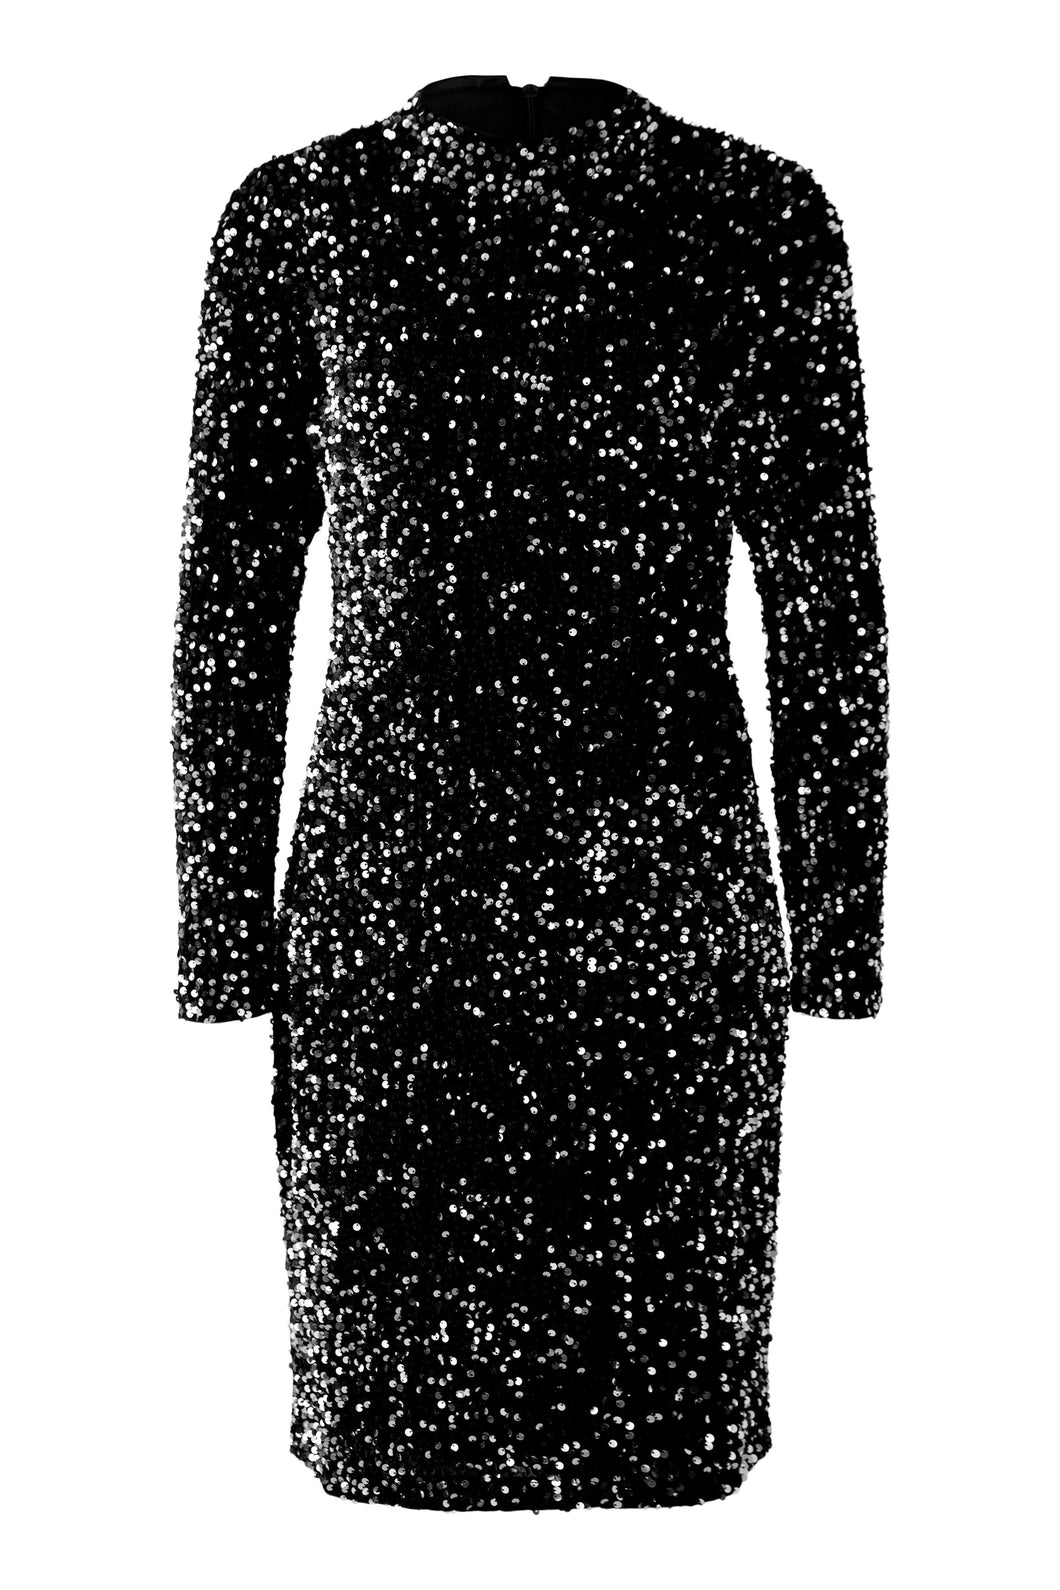 Oui - Black Sequin Dress